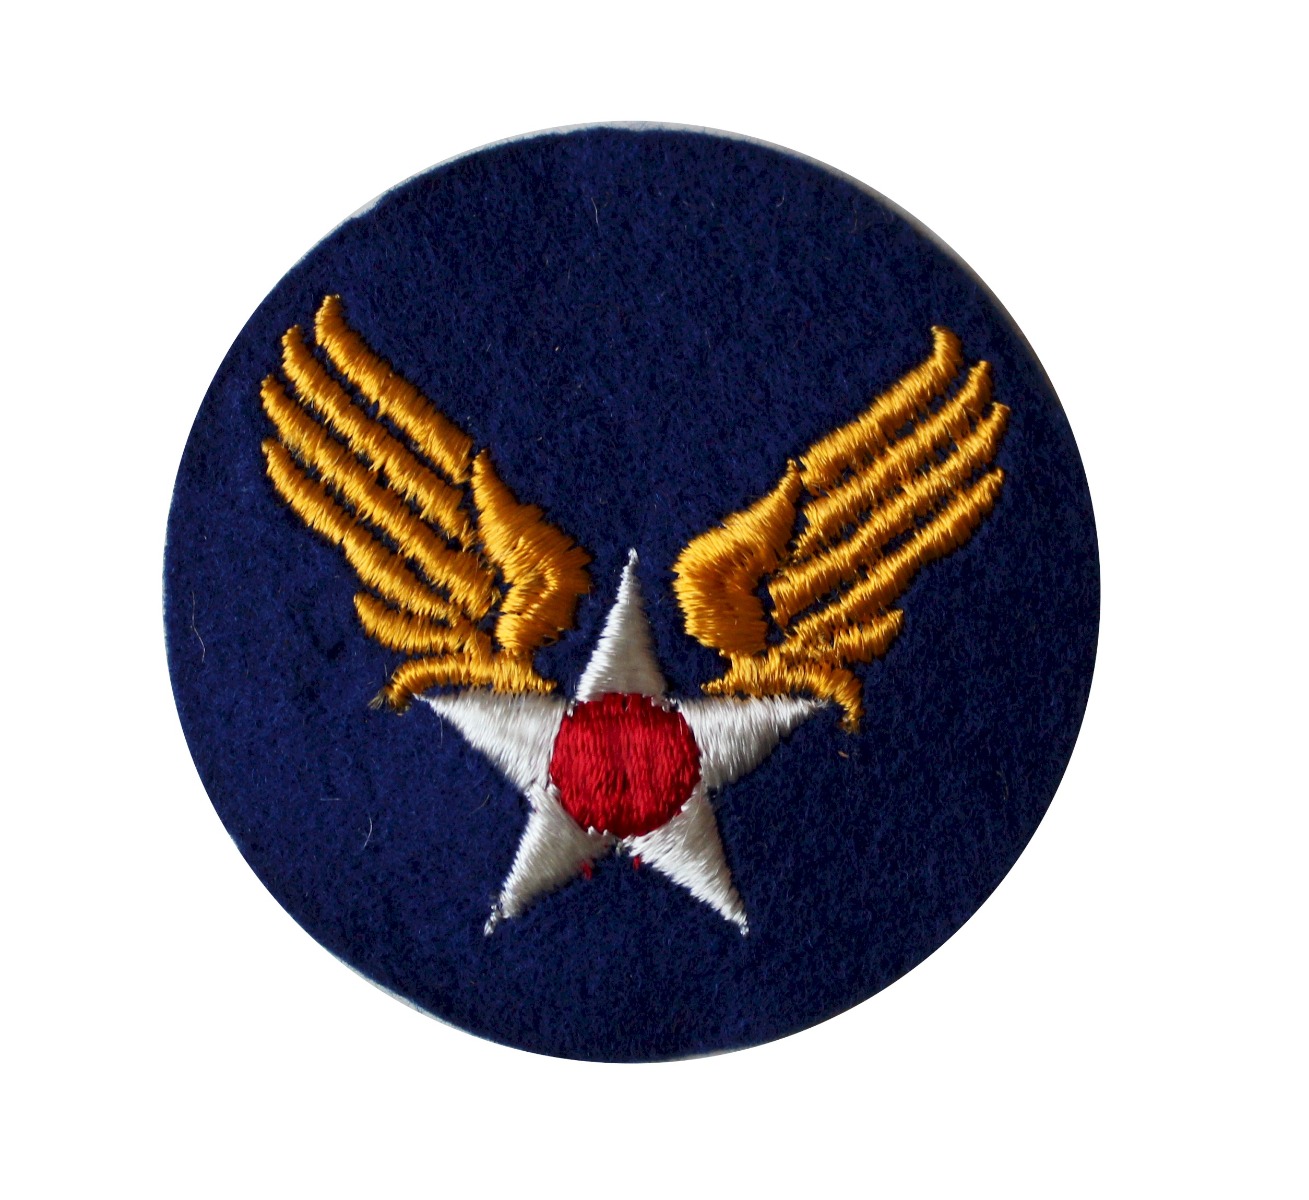 U.S. ARMY AIR FORCES (USAAF or AAF)  BADGE